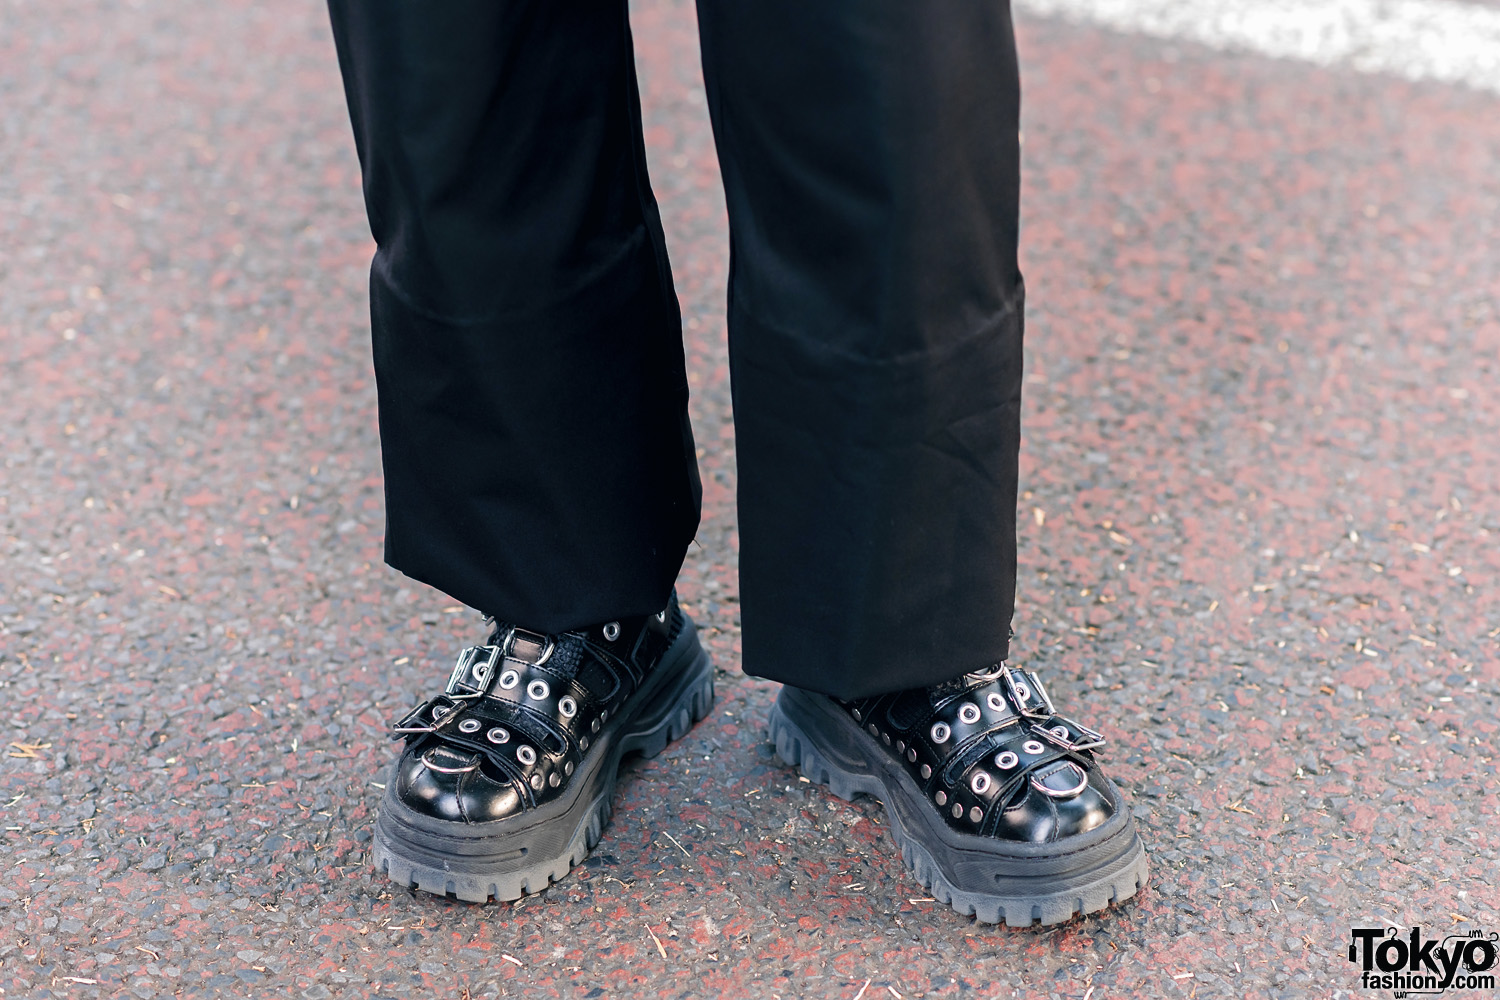  YIWANGO Women's Short Rain Boots Fashion Collage